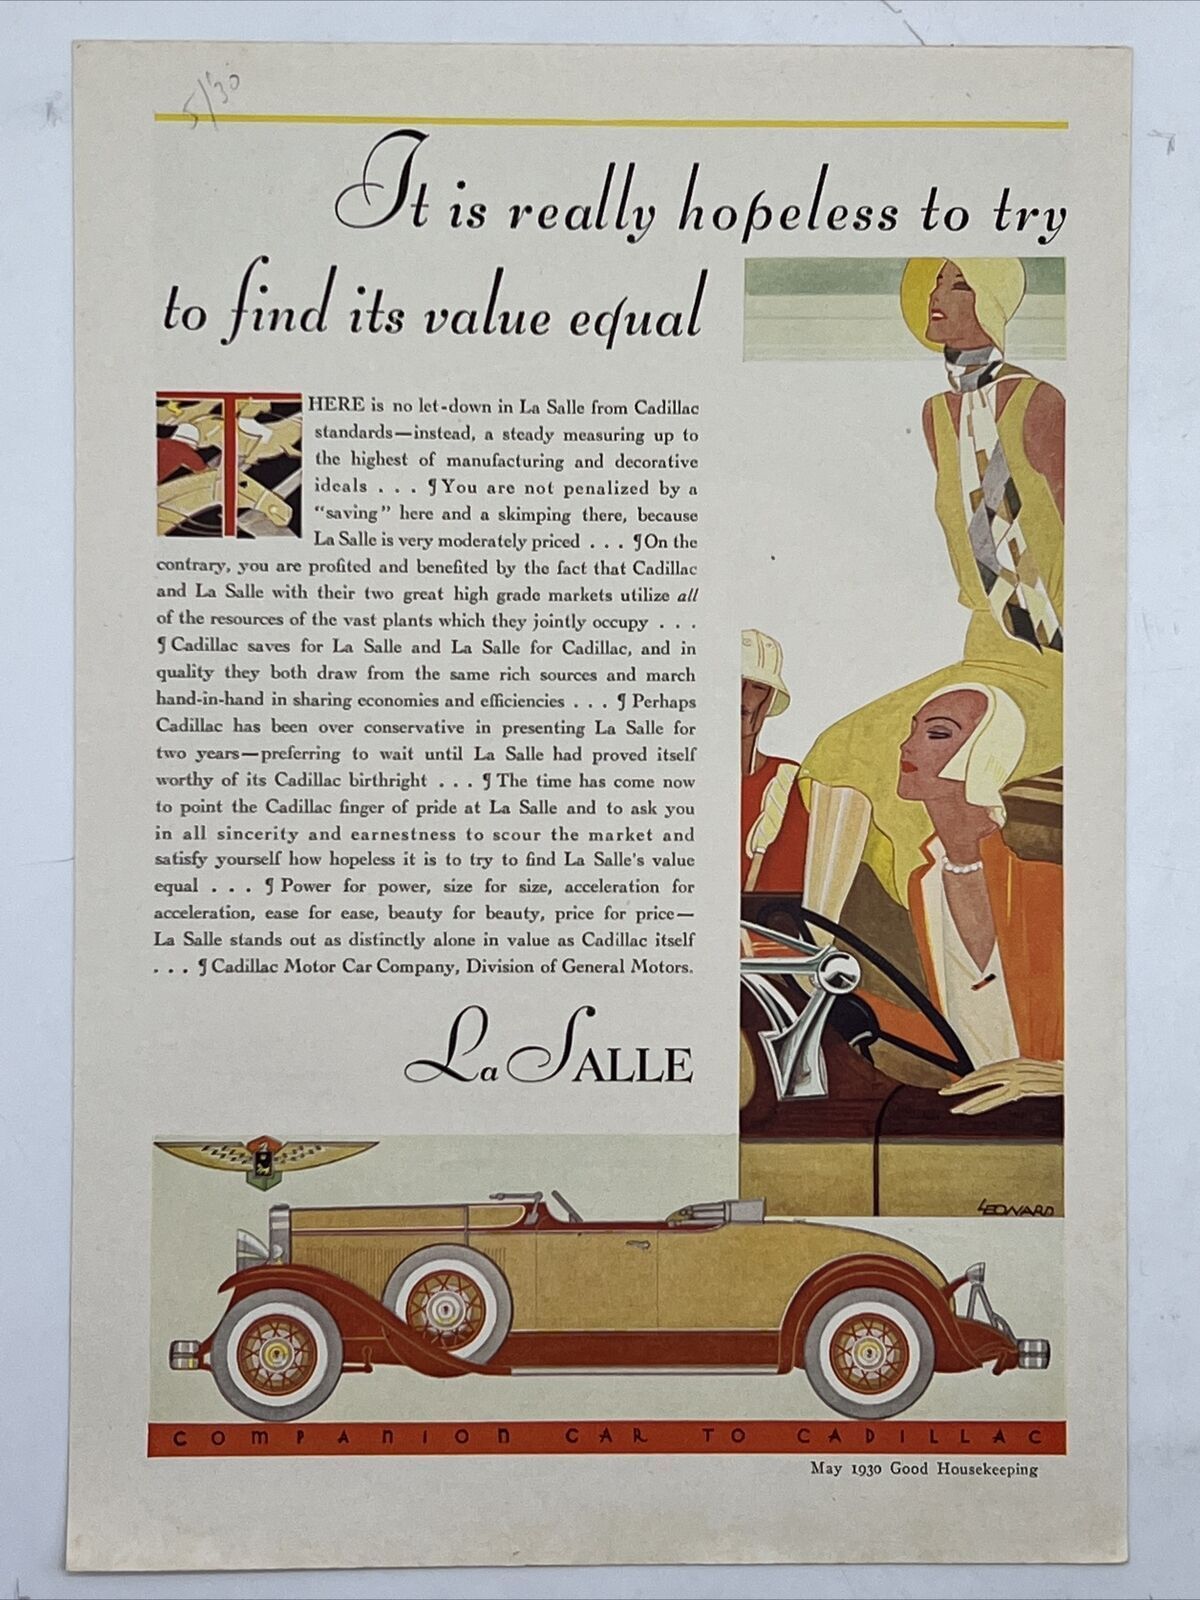 1930 LA SALLE COMPANION TO CADILLAC Good Housekeeping Advertisement ART DECO